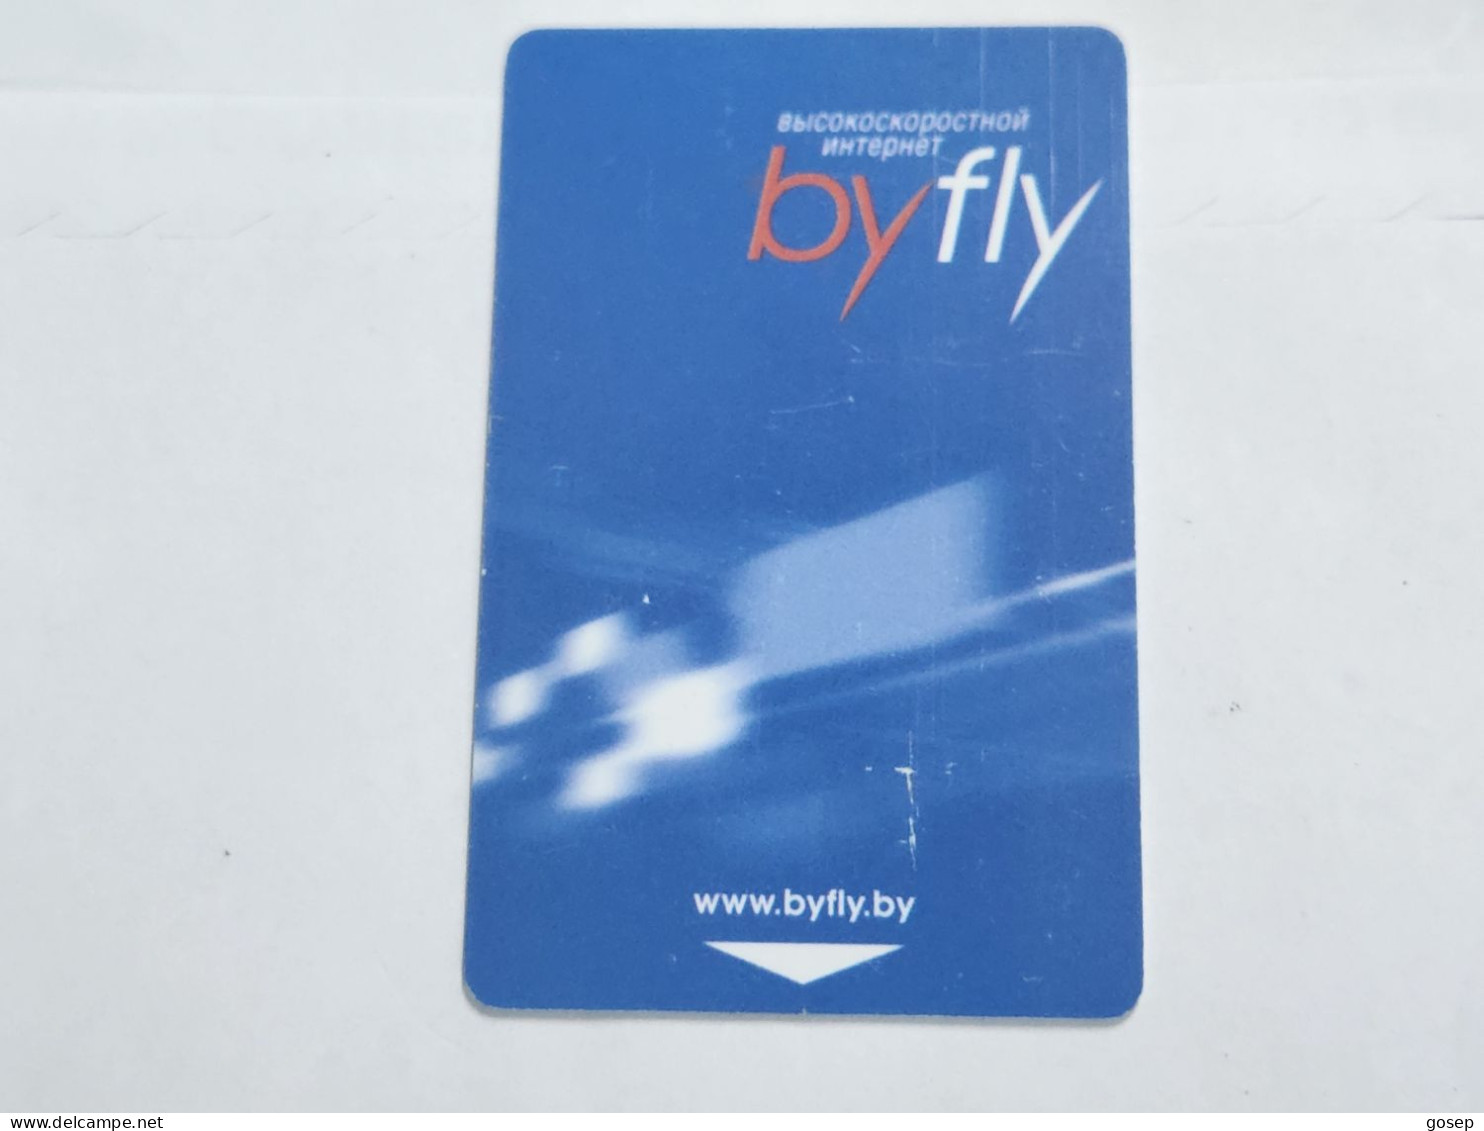 BELARUS-(BY-BLT-168b)-Byfly-High-Speed Internet-(143)(GOLD CHIP)(019177)(tirage-21.500)-used Card+1card Prepiad Free - Belarus